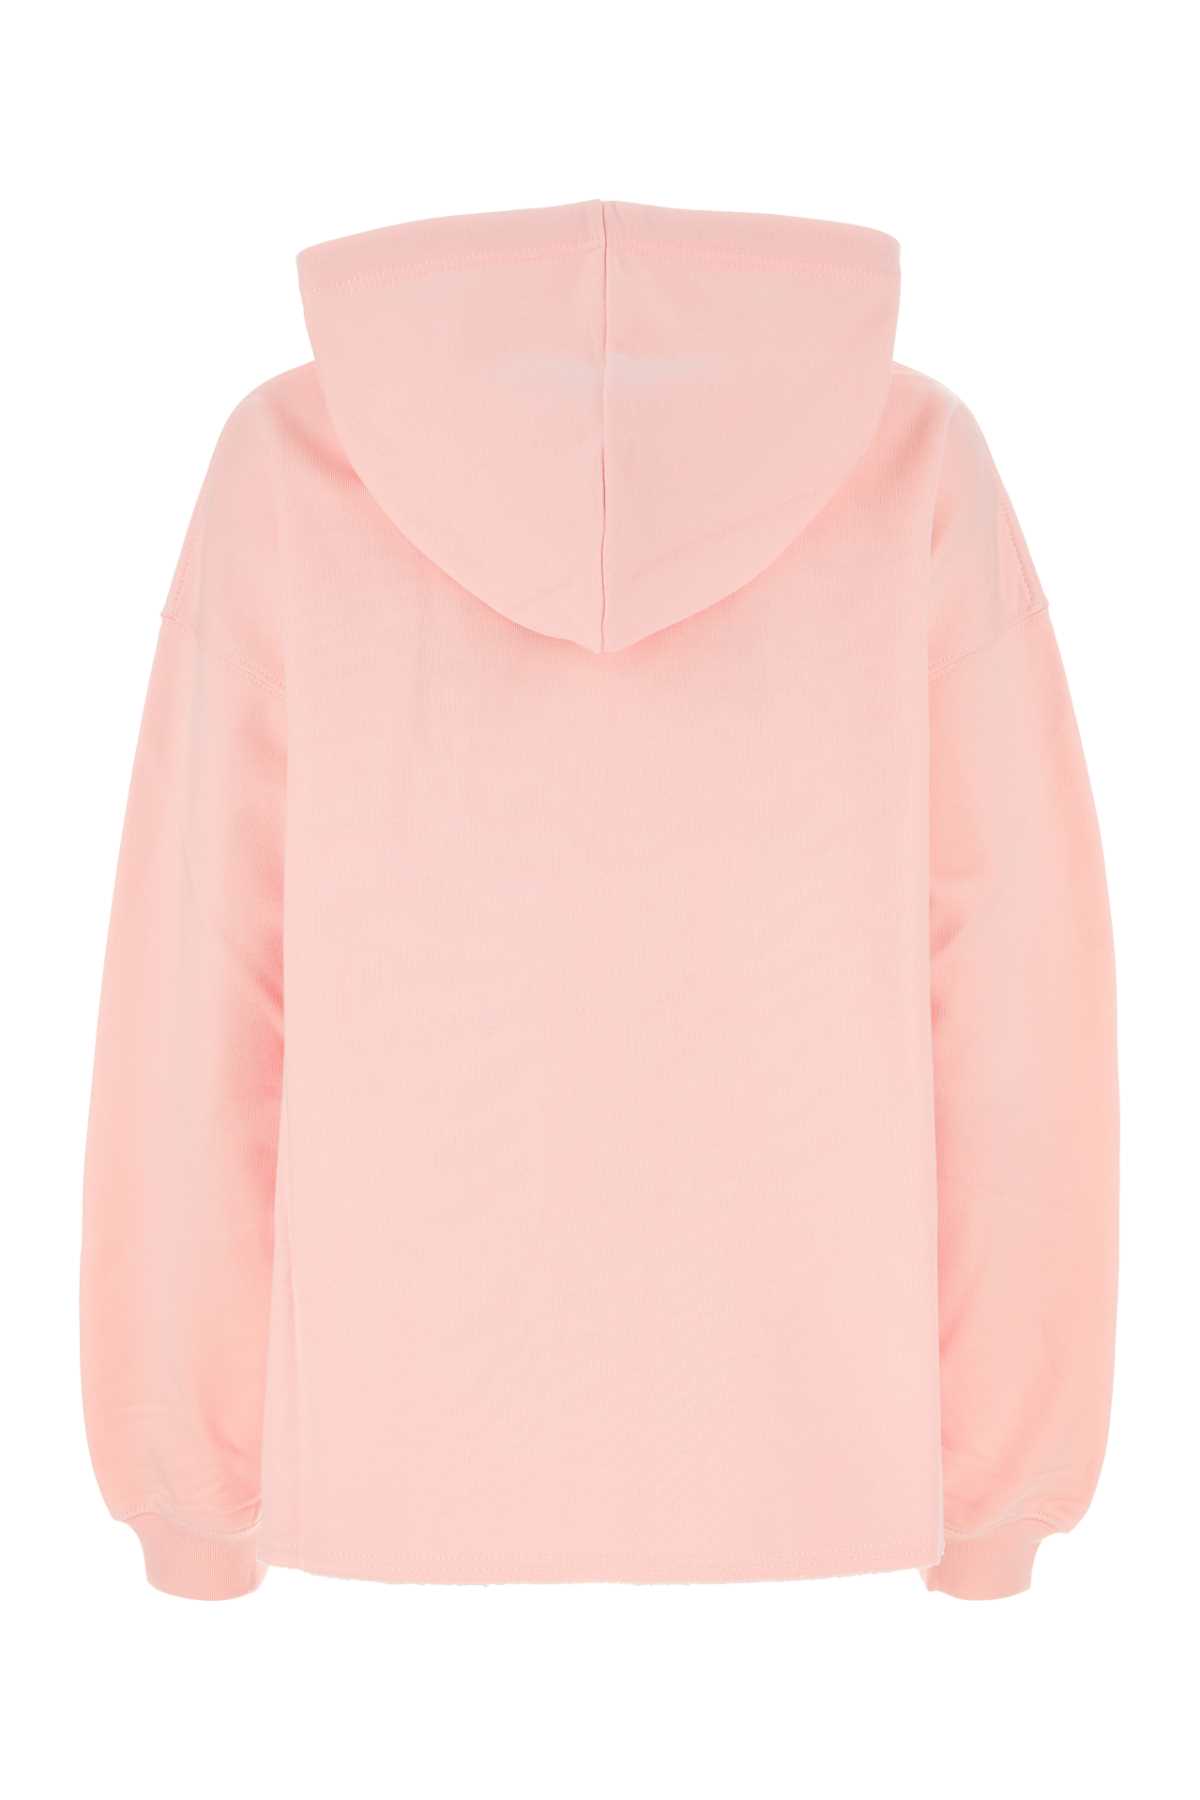 Marni Pink Cotton Sweatshirt In Pinkgummy